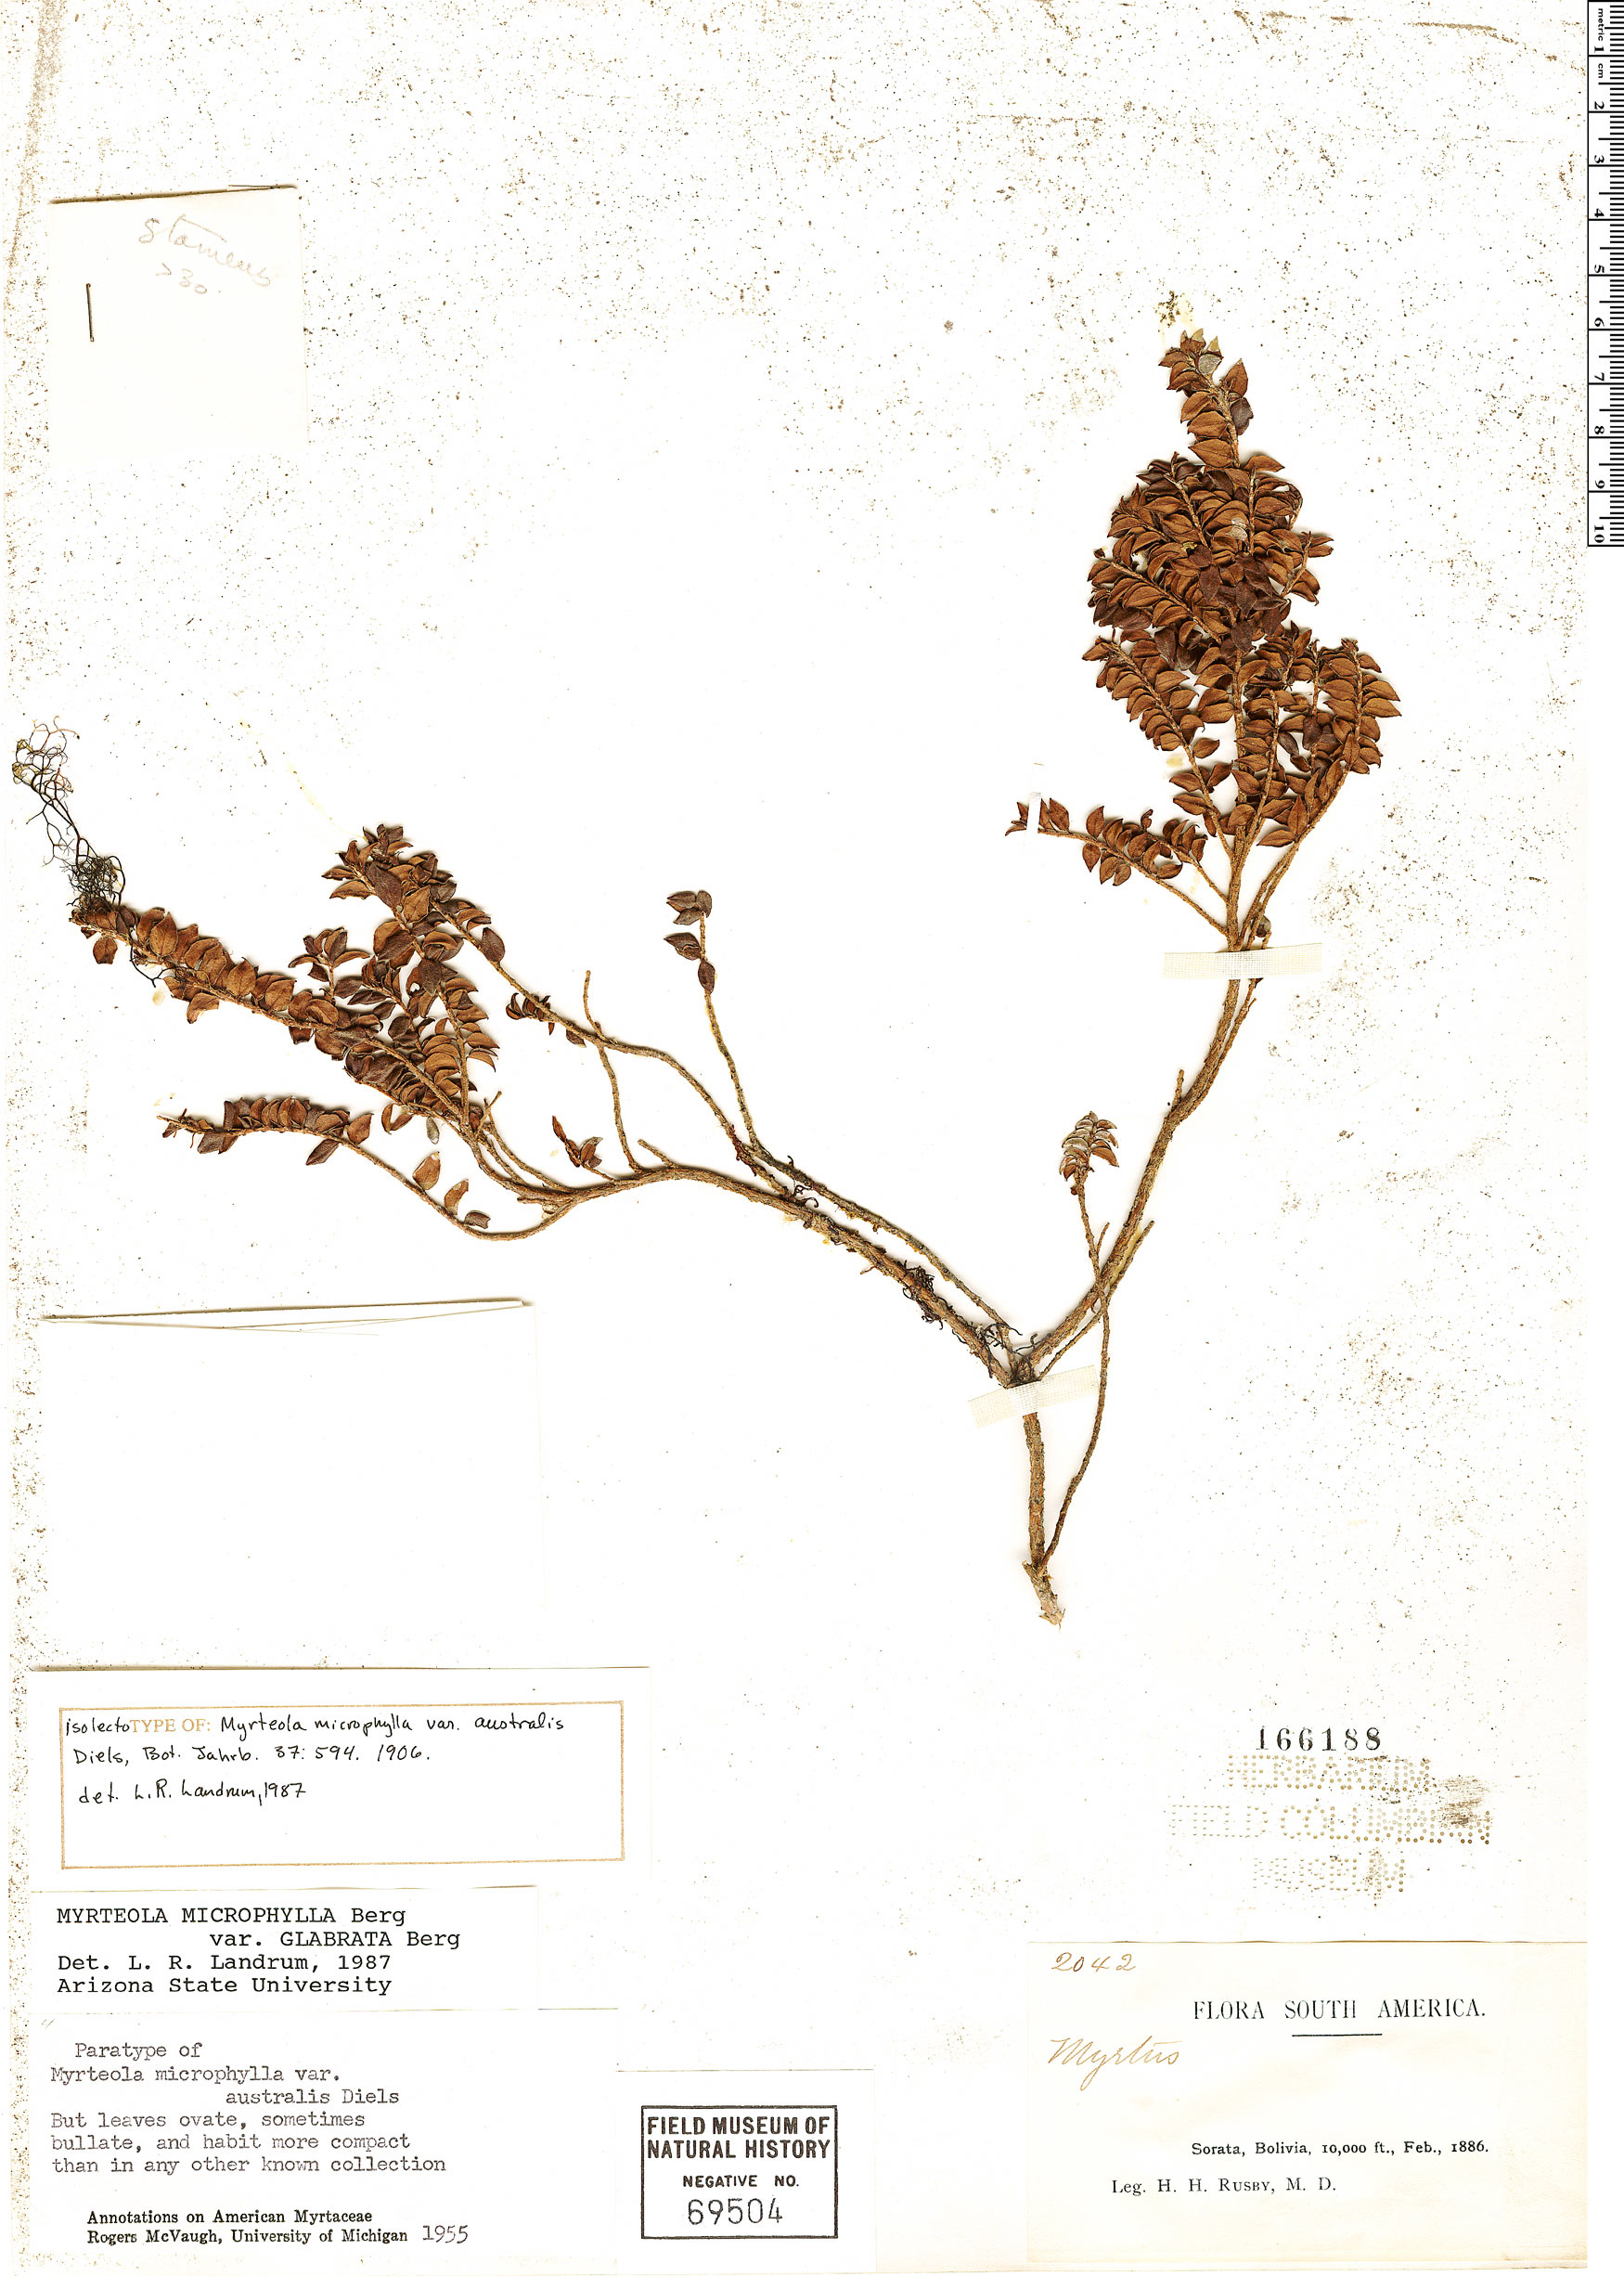 Myrteola microphylla var. australis image